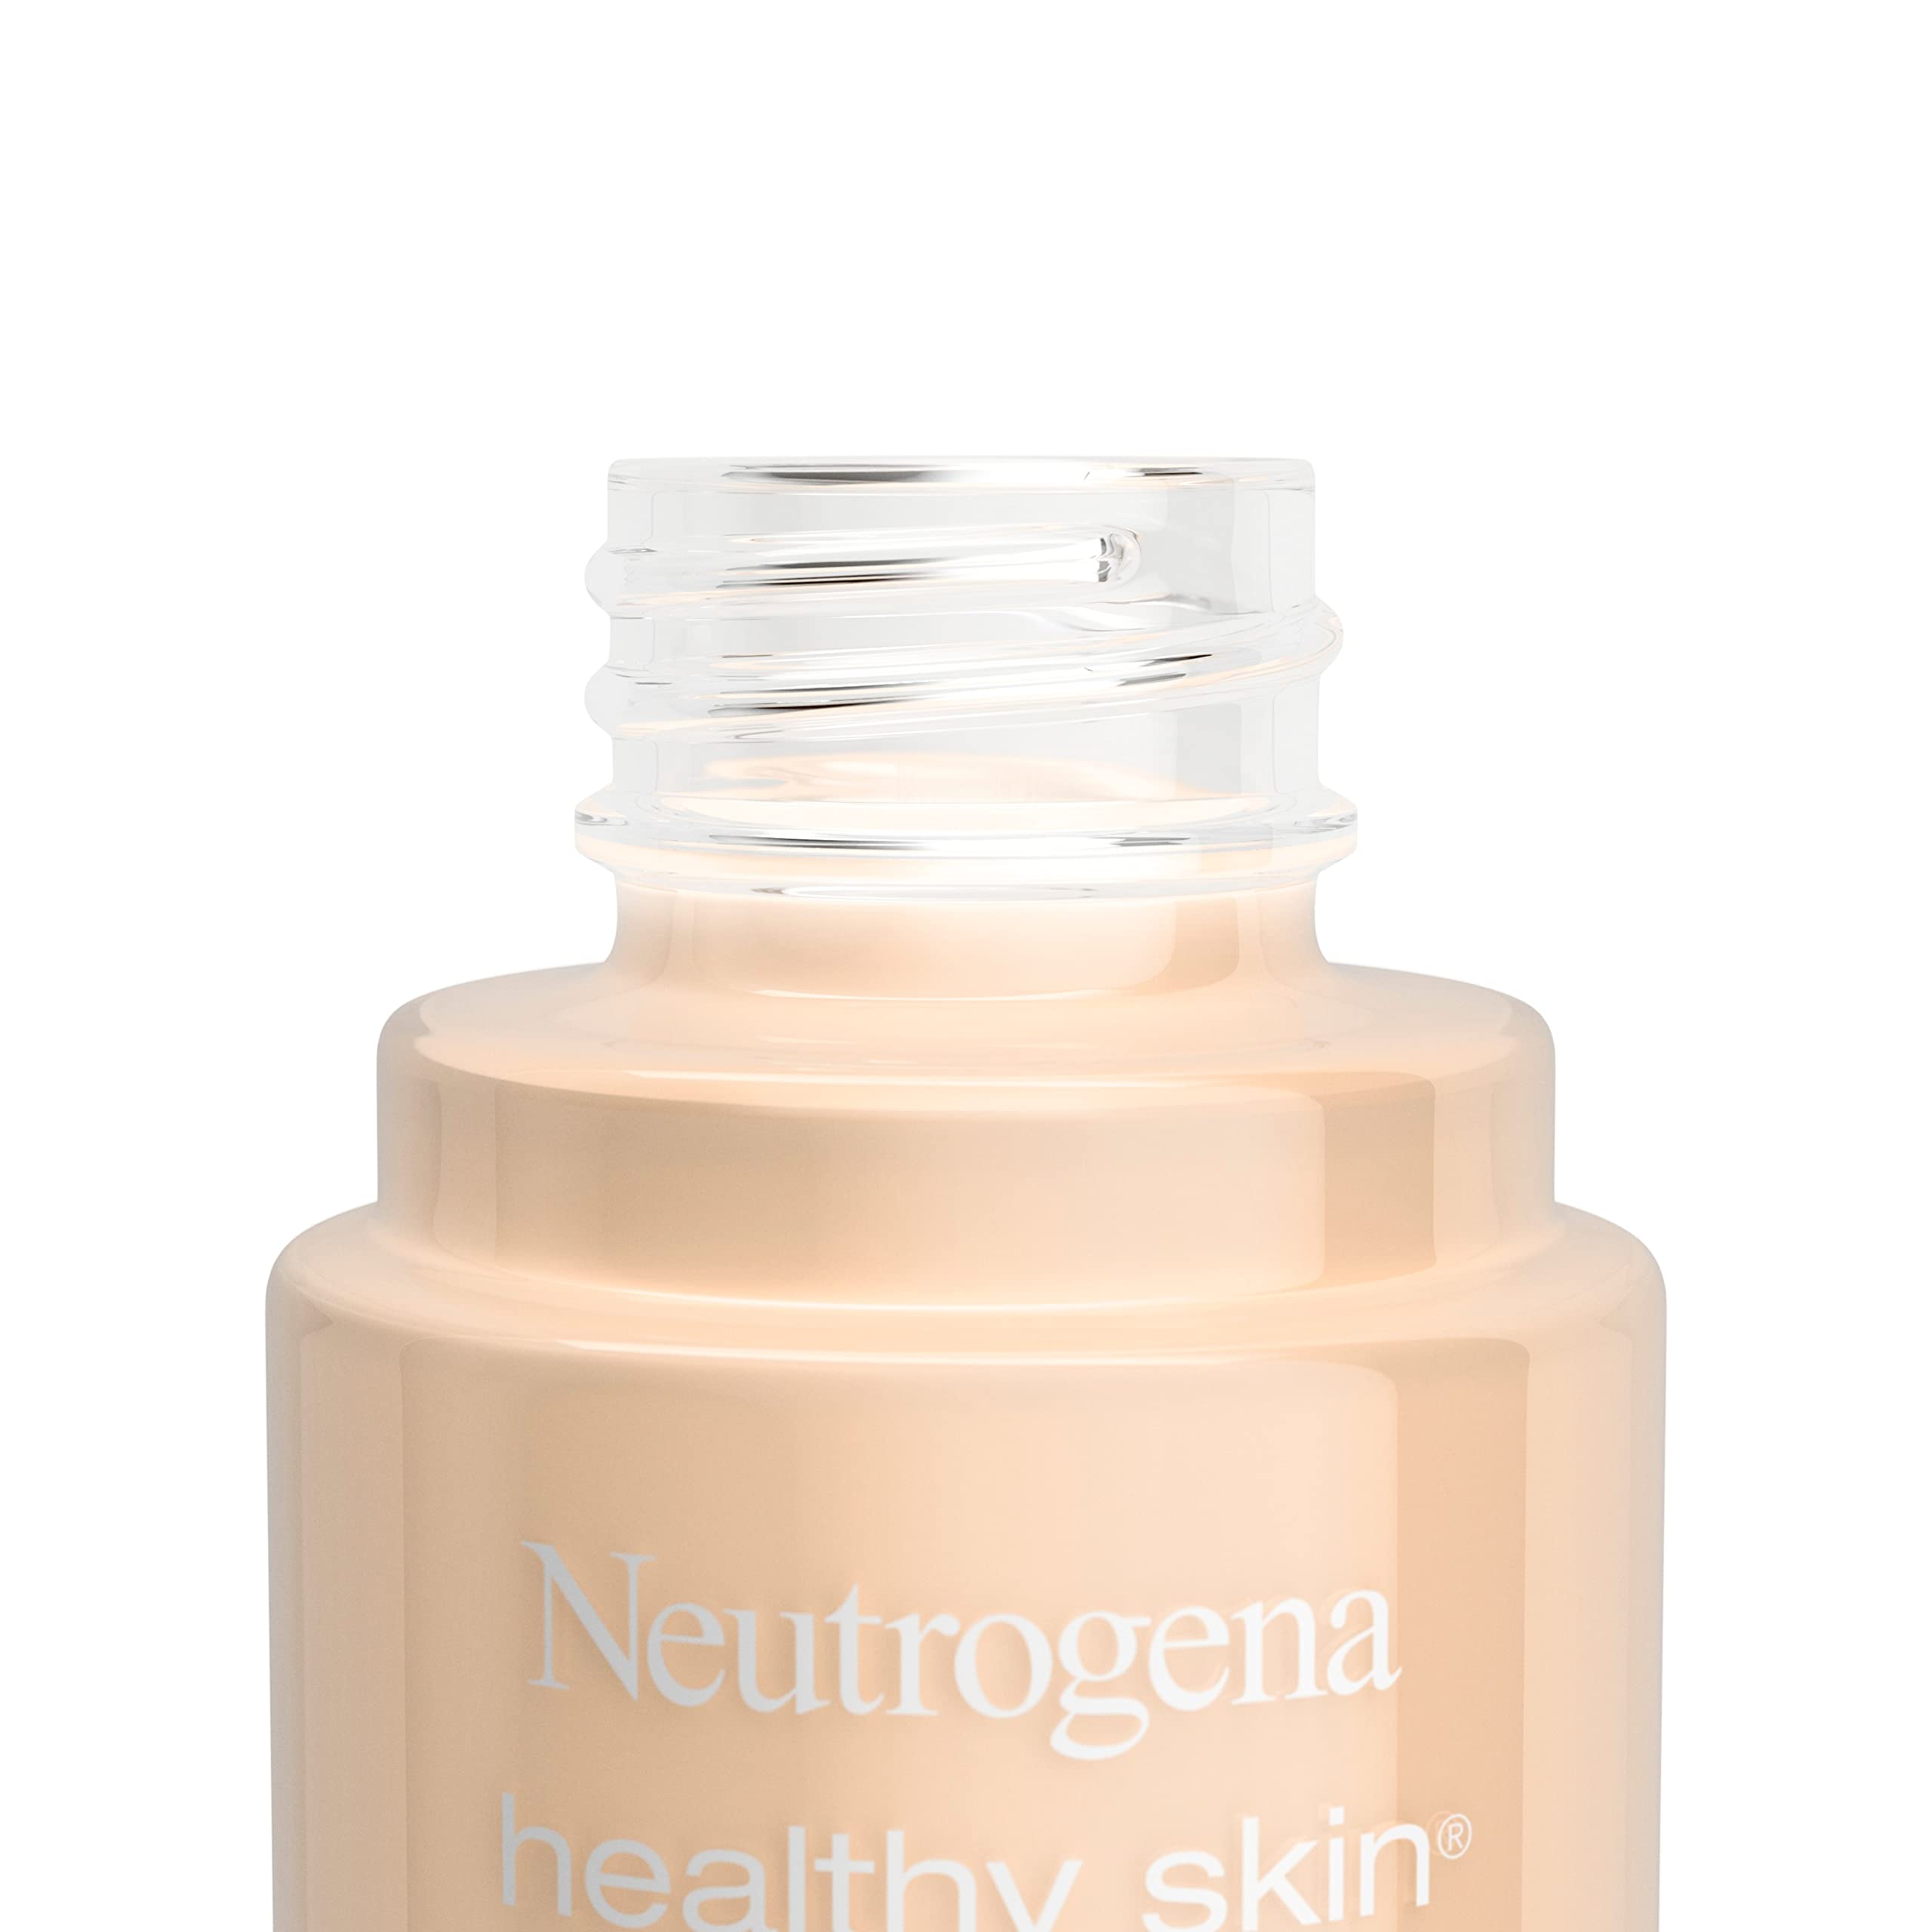 Neutrogena Healthy Skin Liquid Makeup Foundation,Broad Spectrum SPF 20 Sunscreen,Lightweight & Flawless Coverage Foundation with Antioxidant Vitamin E & Feverfew,Natural Beige,1 fl. oz (Pack of 1)